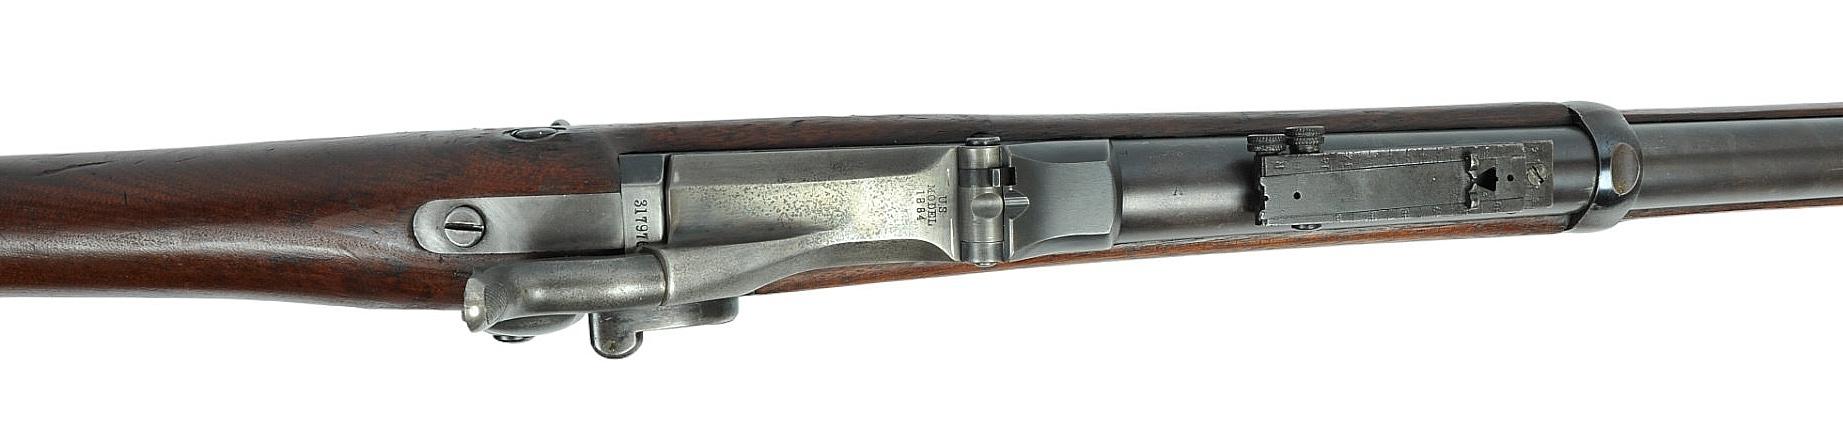 US Military Spanish-American War era M1884 45-70 Trapdoor Breech-Loading Rifle - Antique (VDM1)